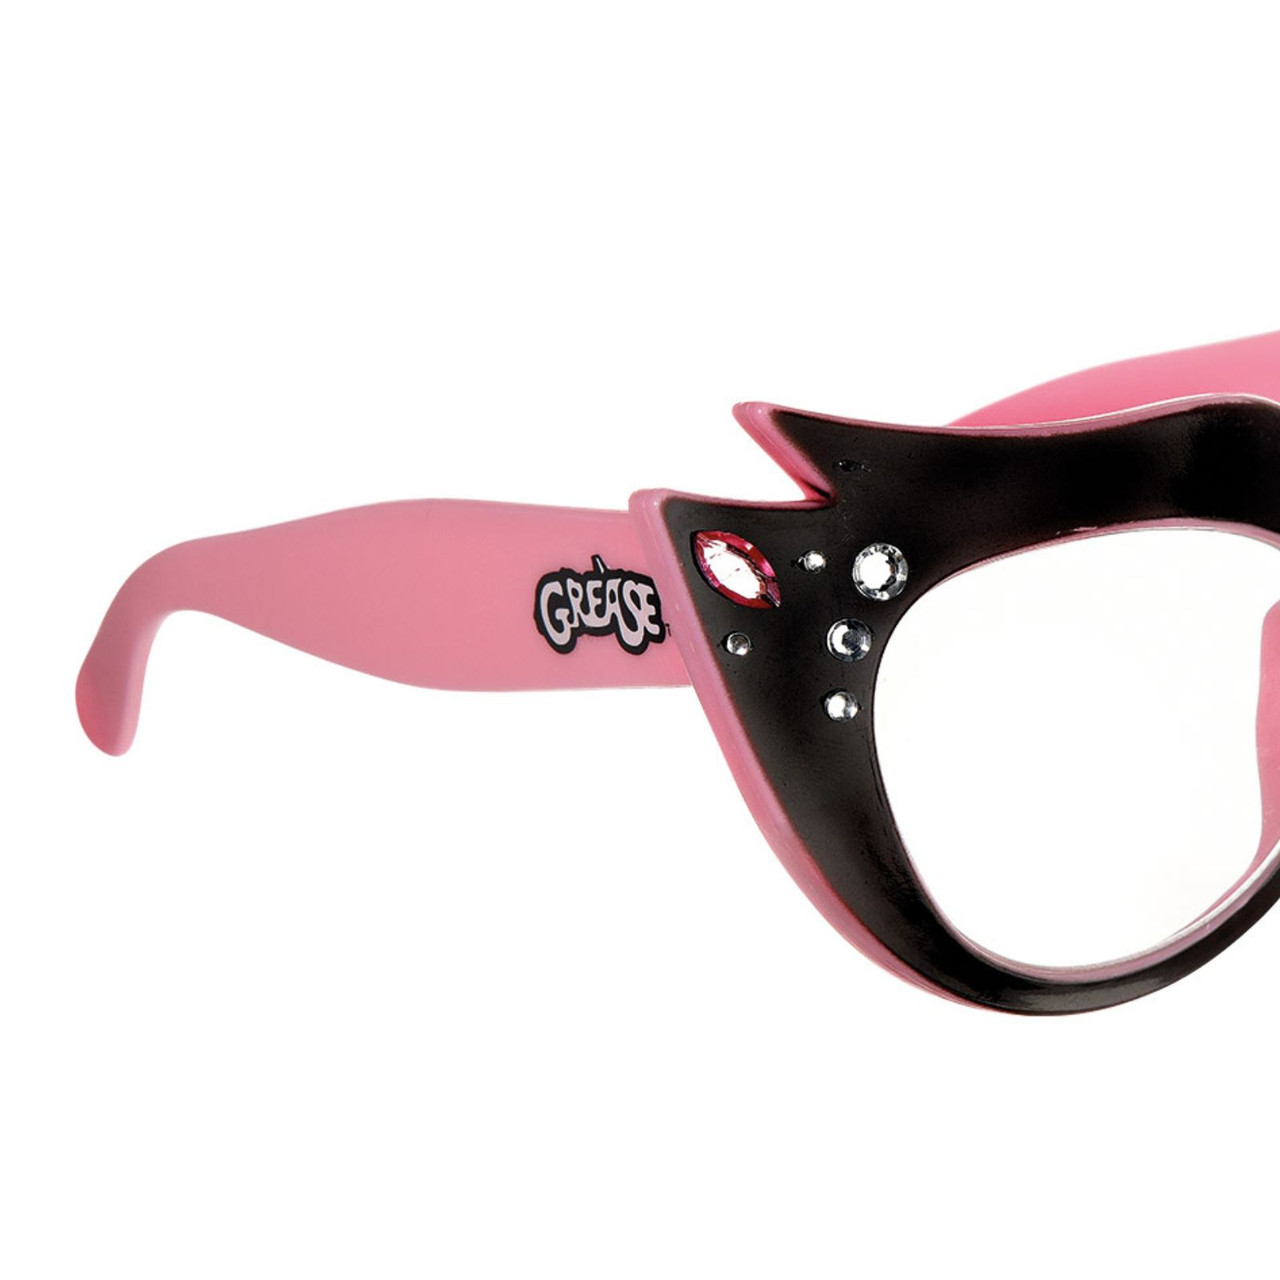 2-Grease Mask Sunglasses - Pink - $765 — Hamptons Real Estate